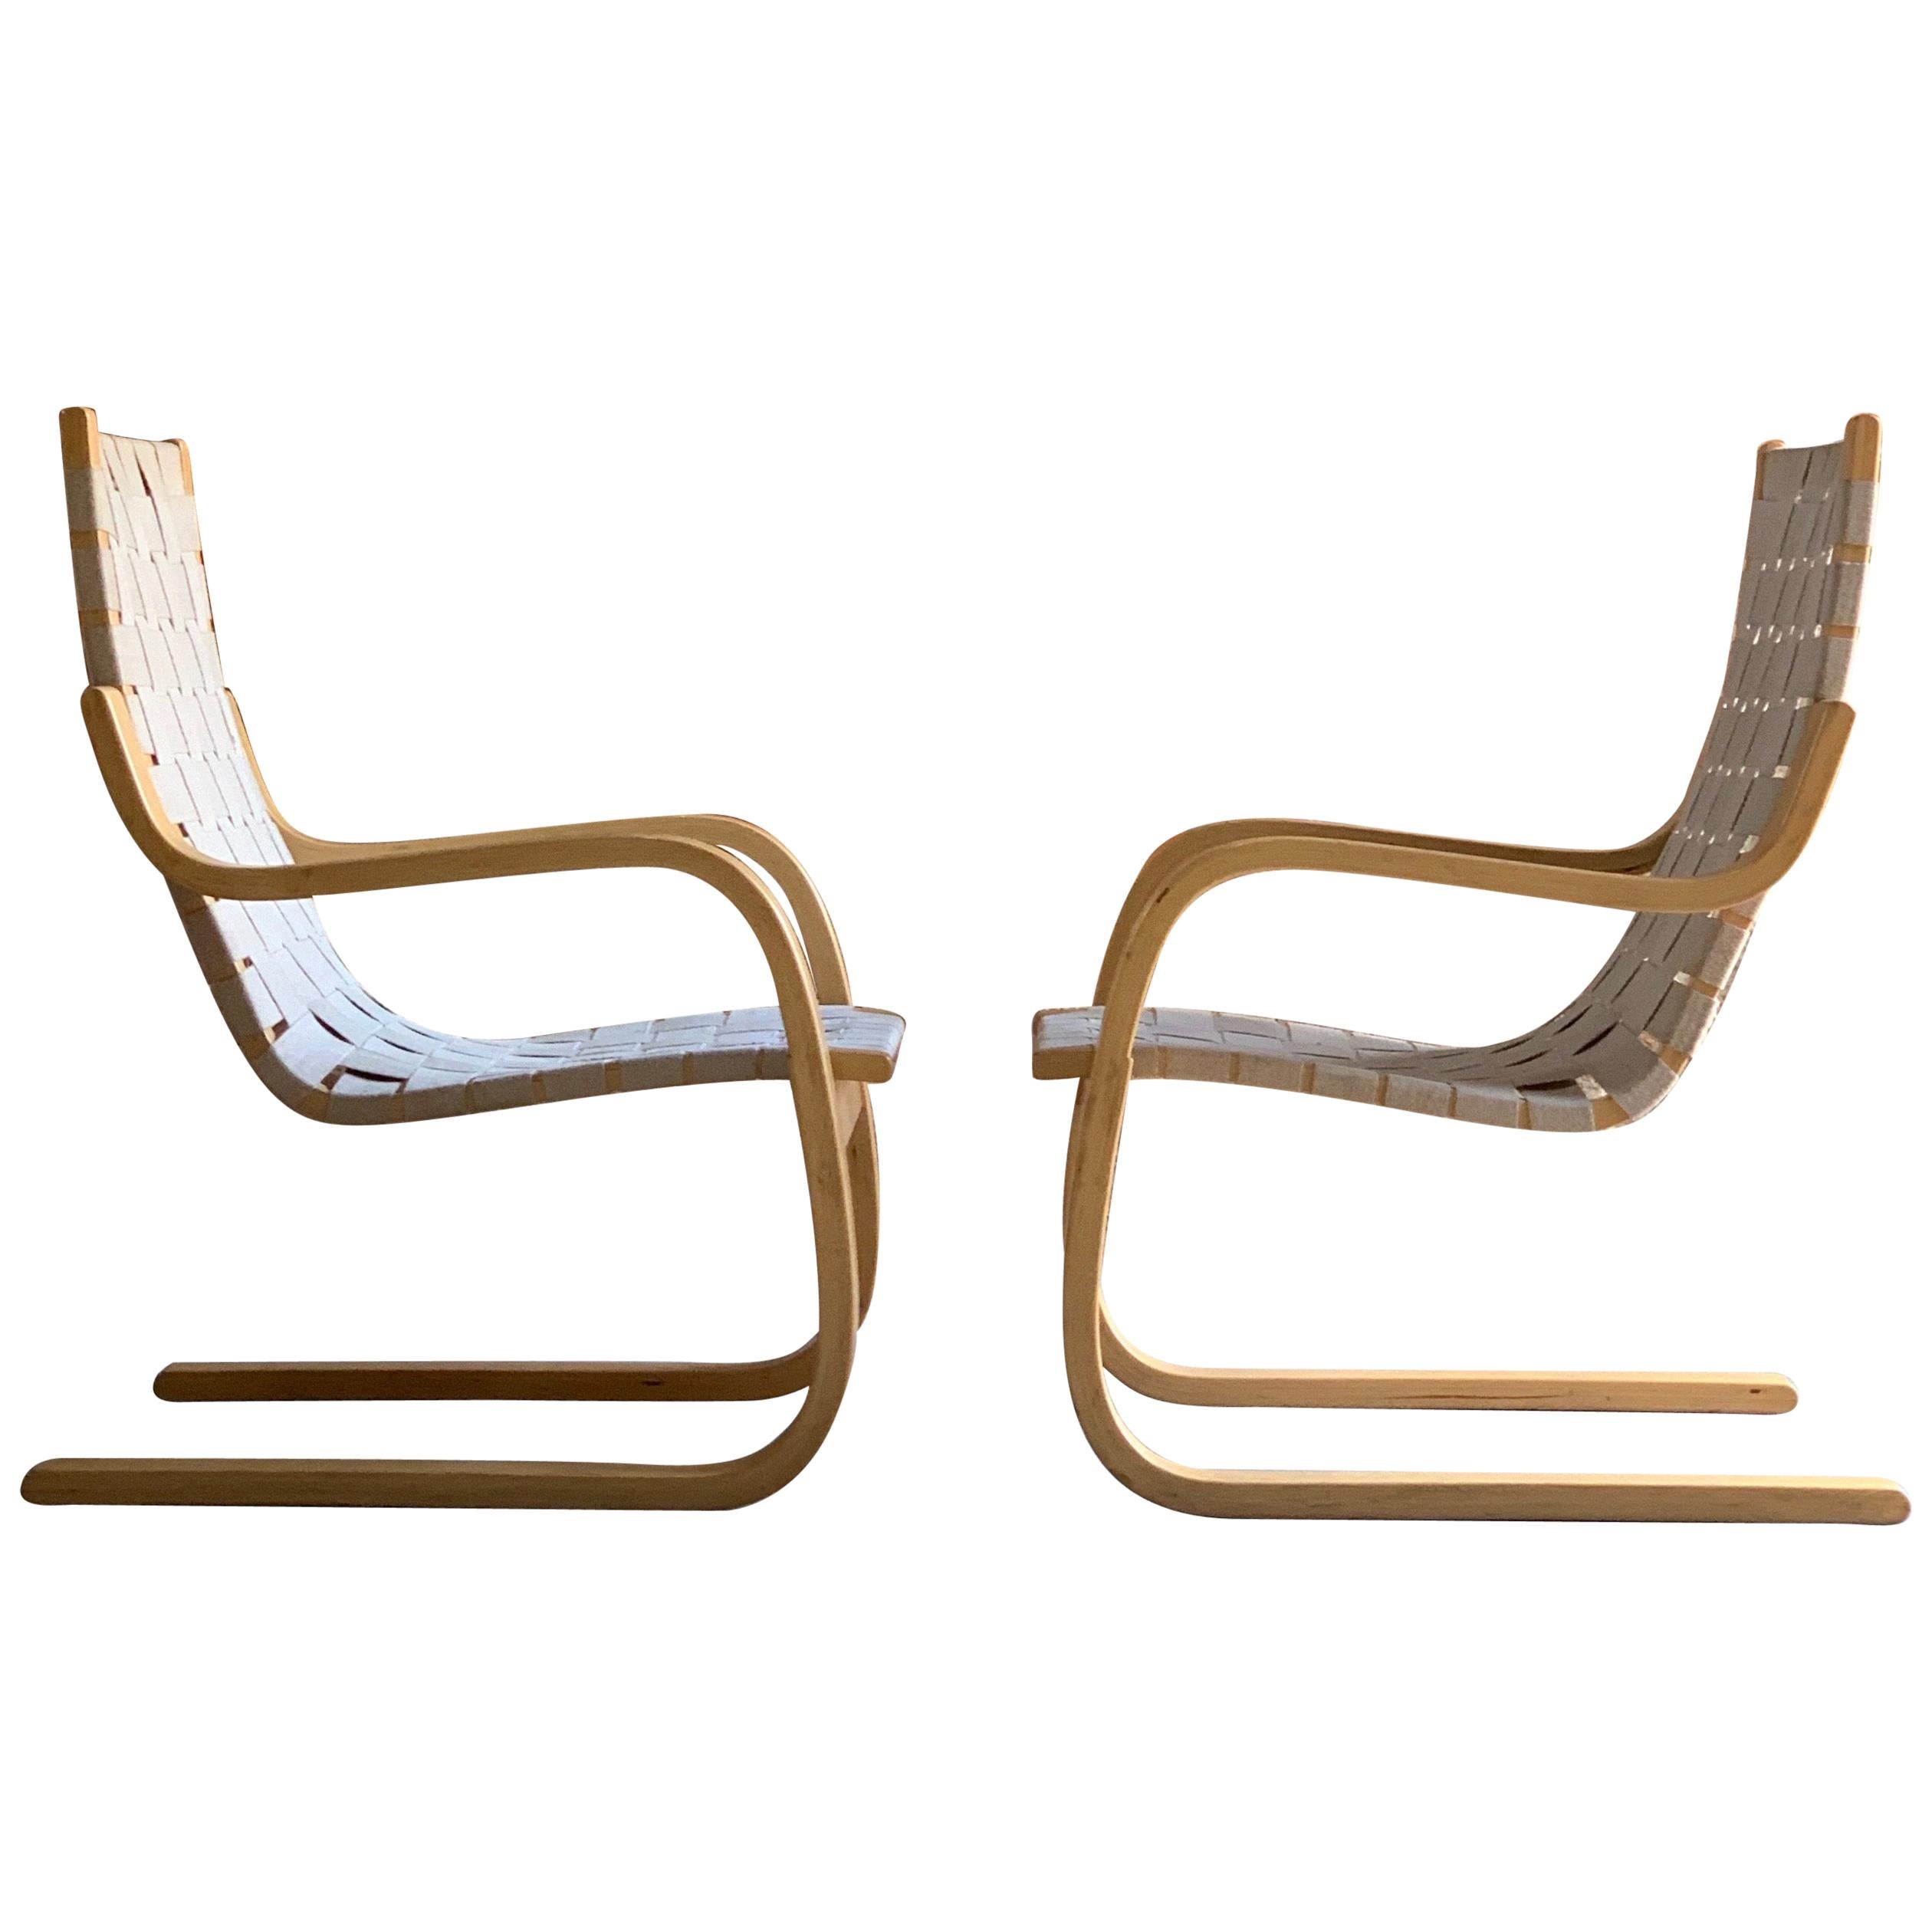 Alvar Aalto Armchair Model 406 Pair of Cantilever Chairs by Artek, circa 1970s